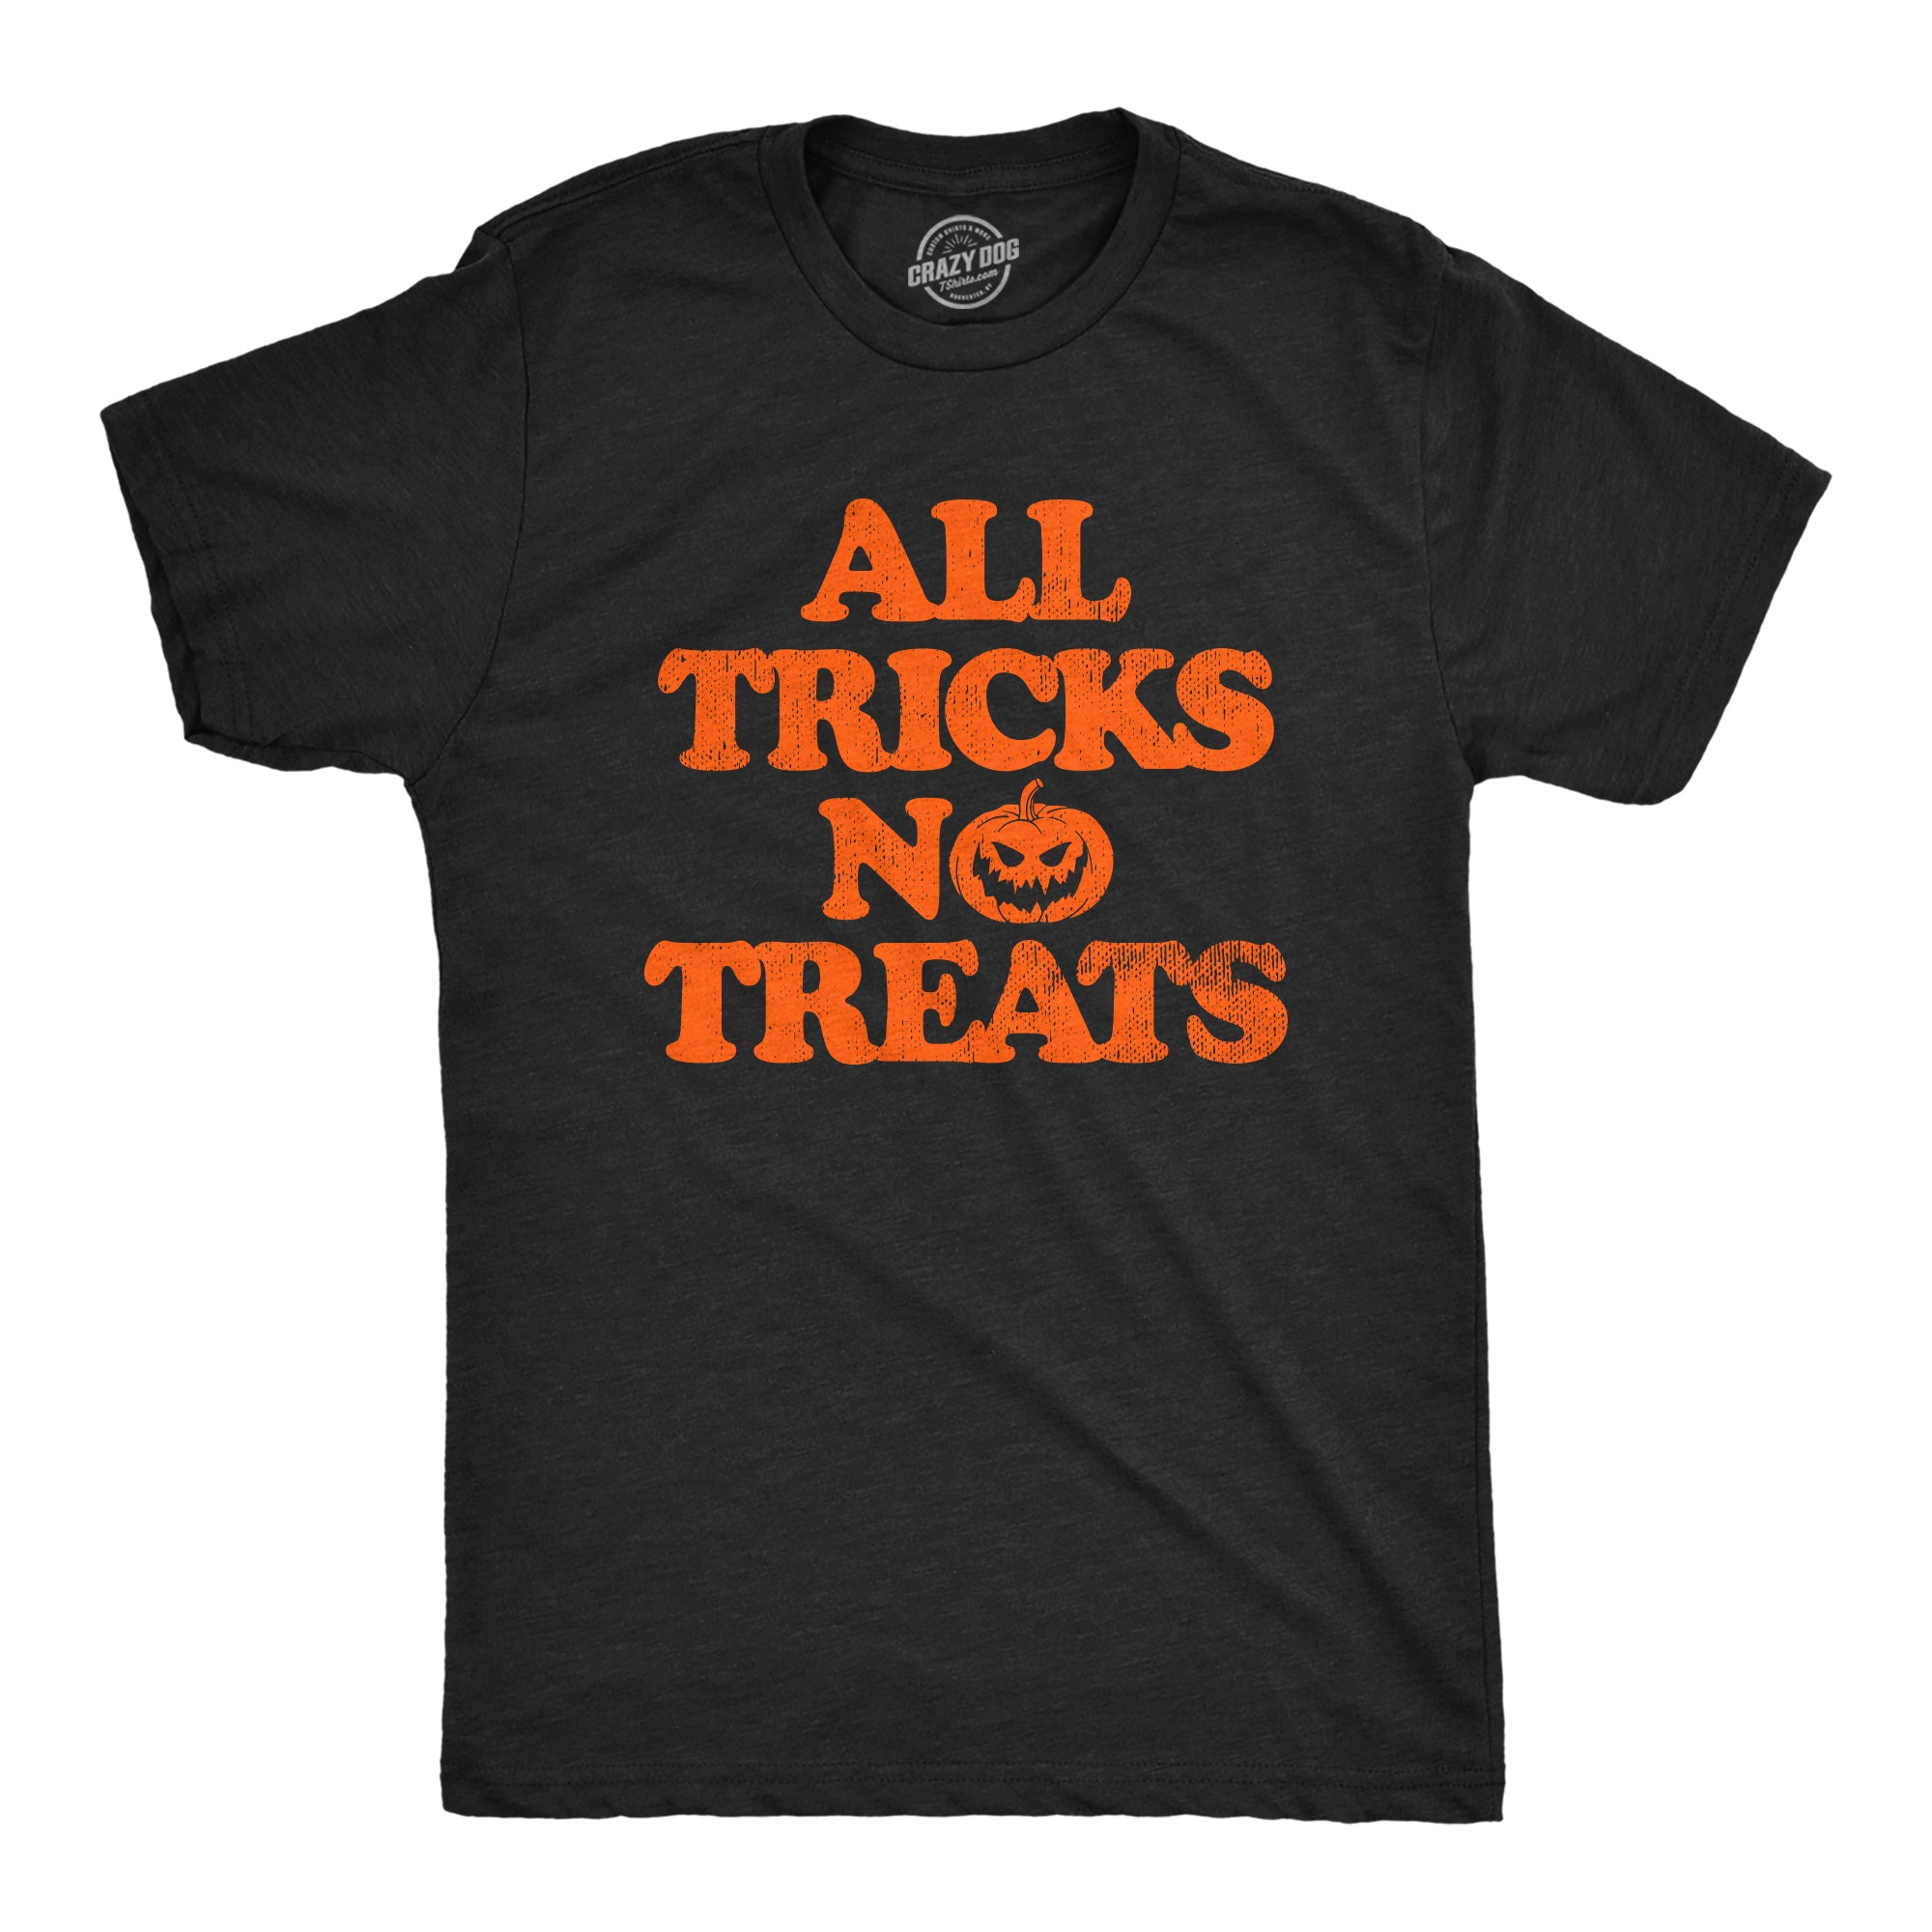 Funny Heather Black - TRICKS All Tricks No Treats Mens T Shirt Nerdy Halloween Sarcastic Tee